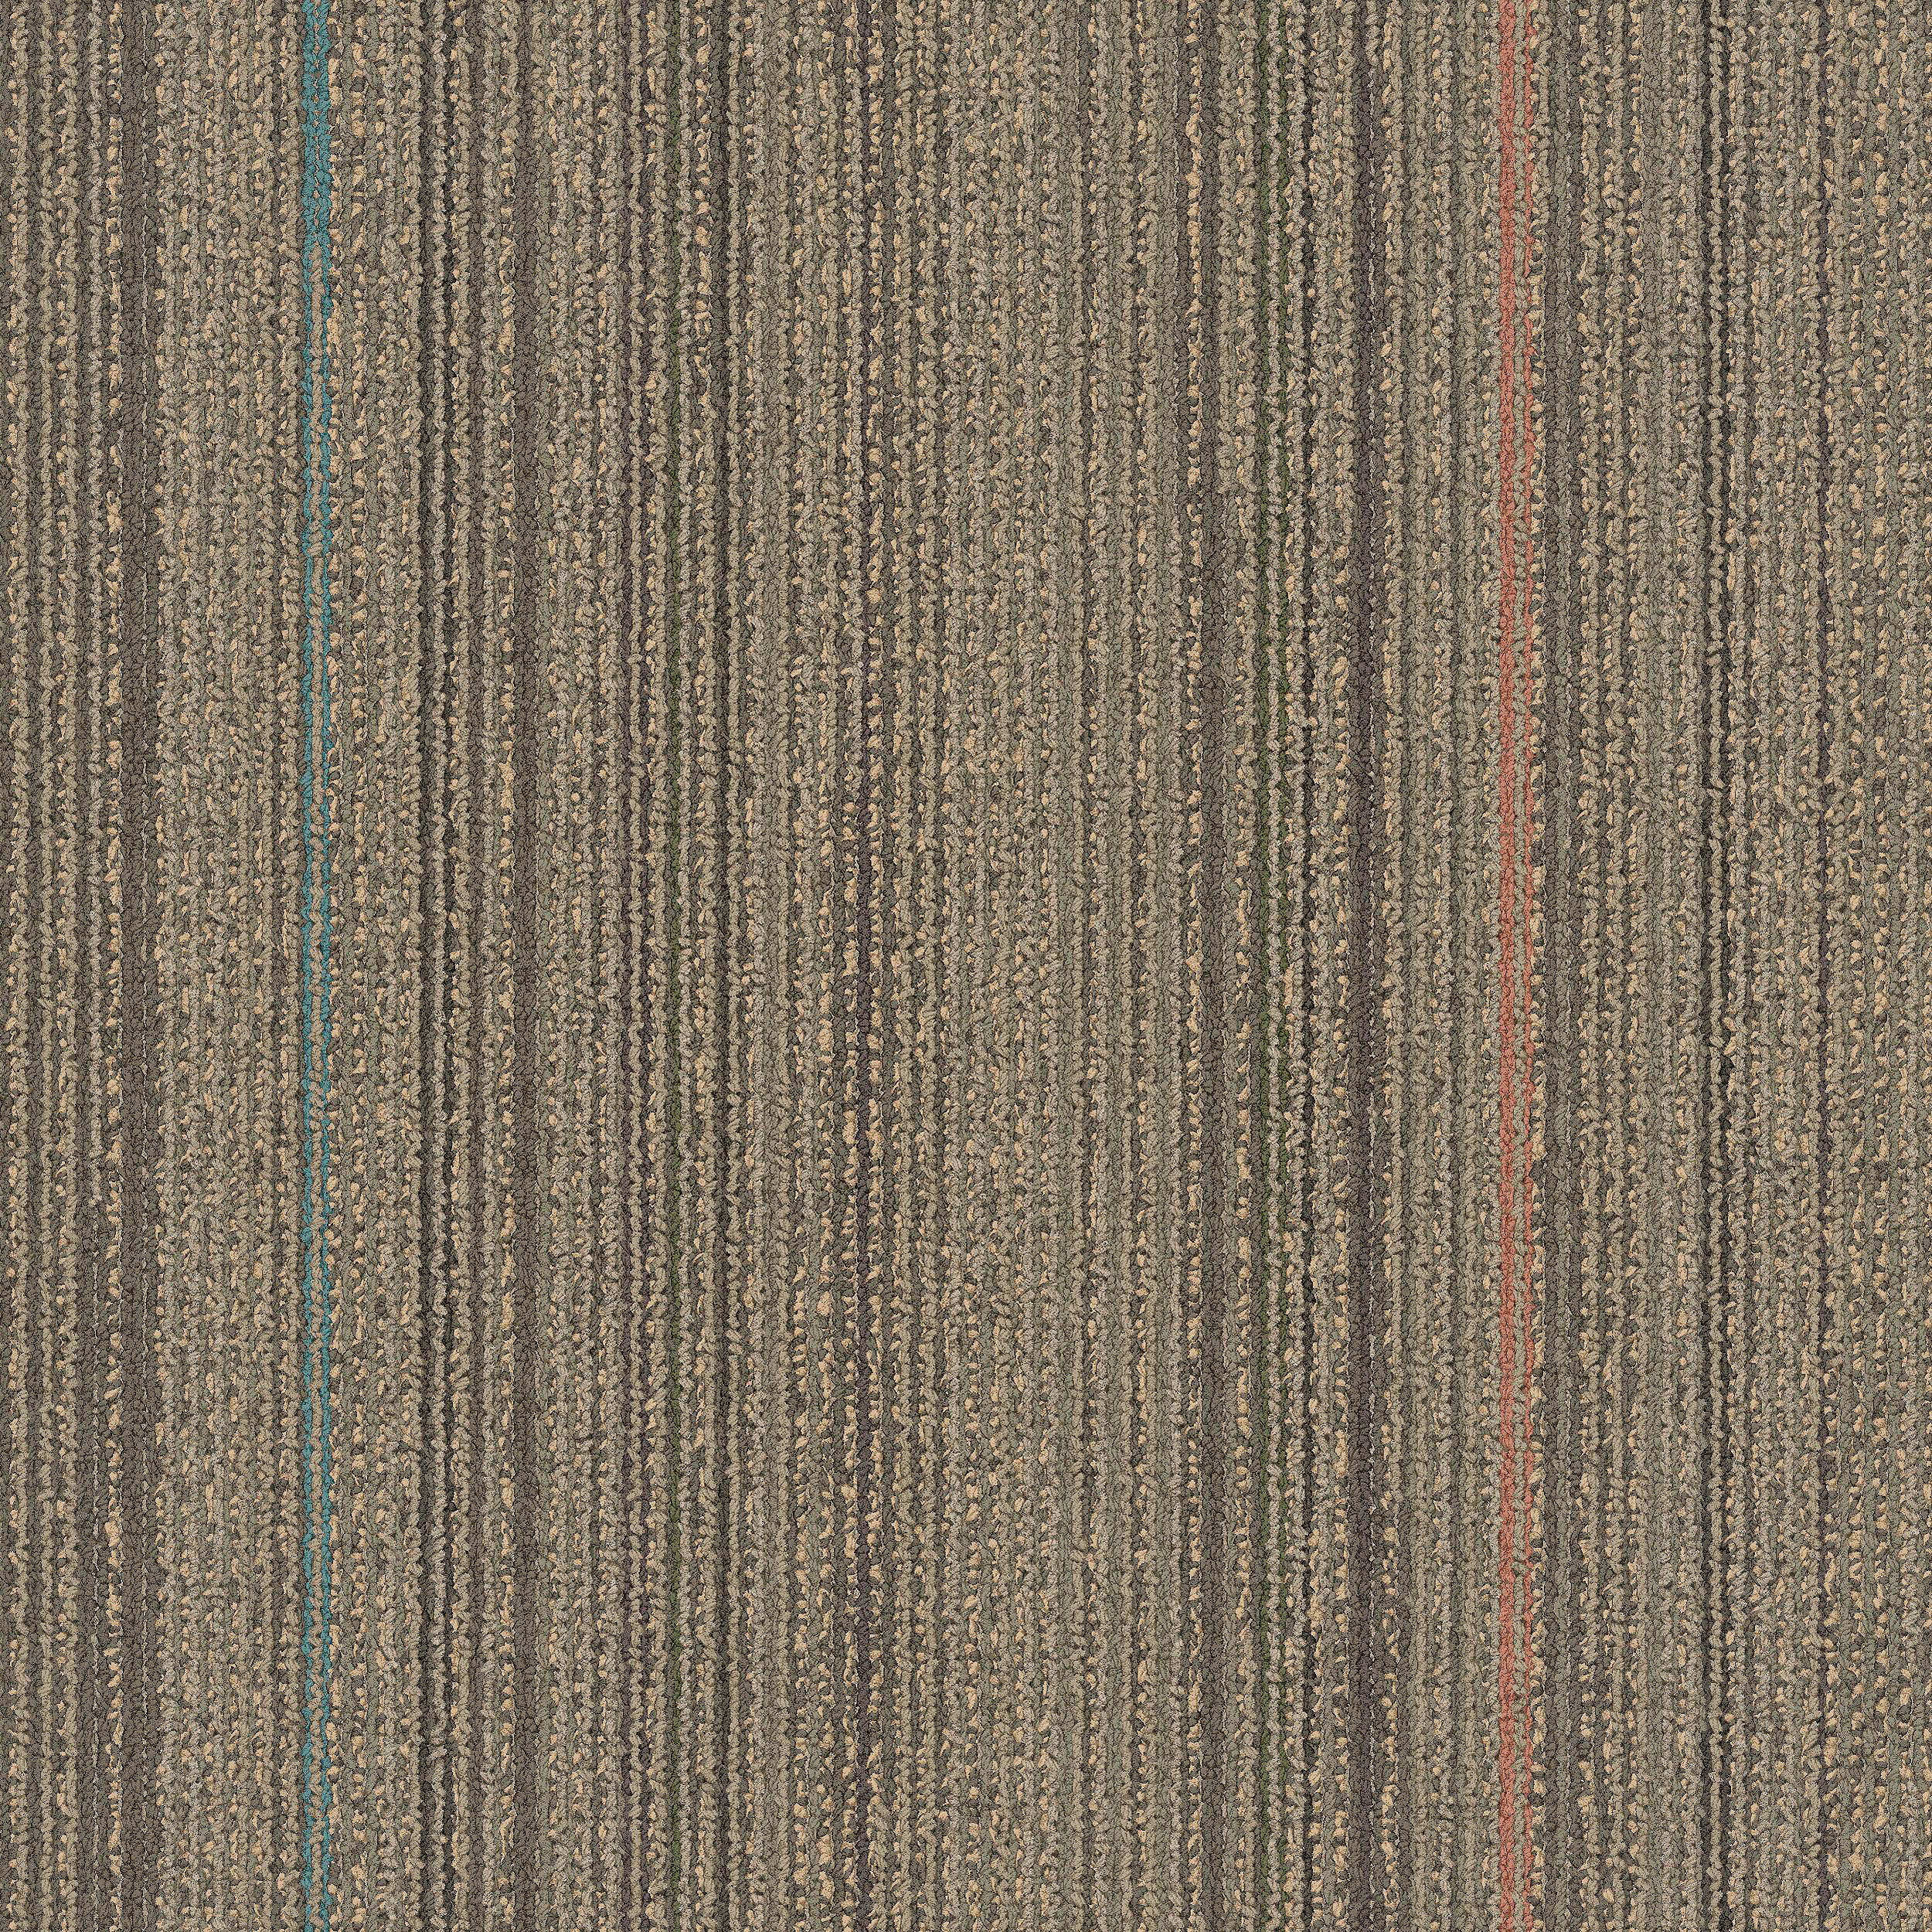 Primary Stitch Carpet Tile In Chain/Accent imagen número 8